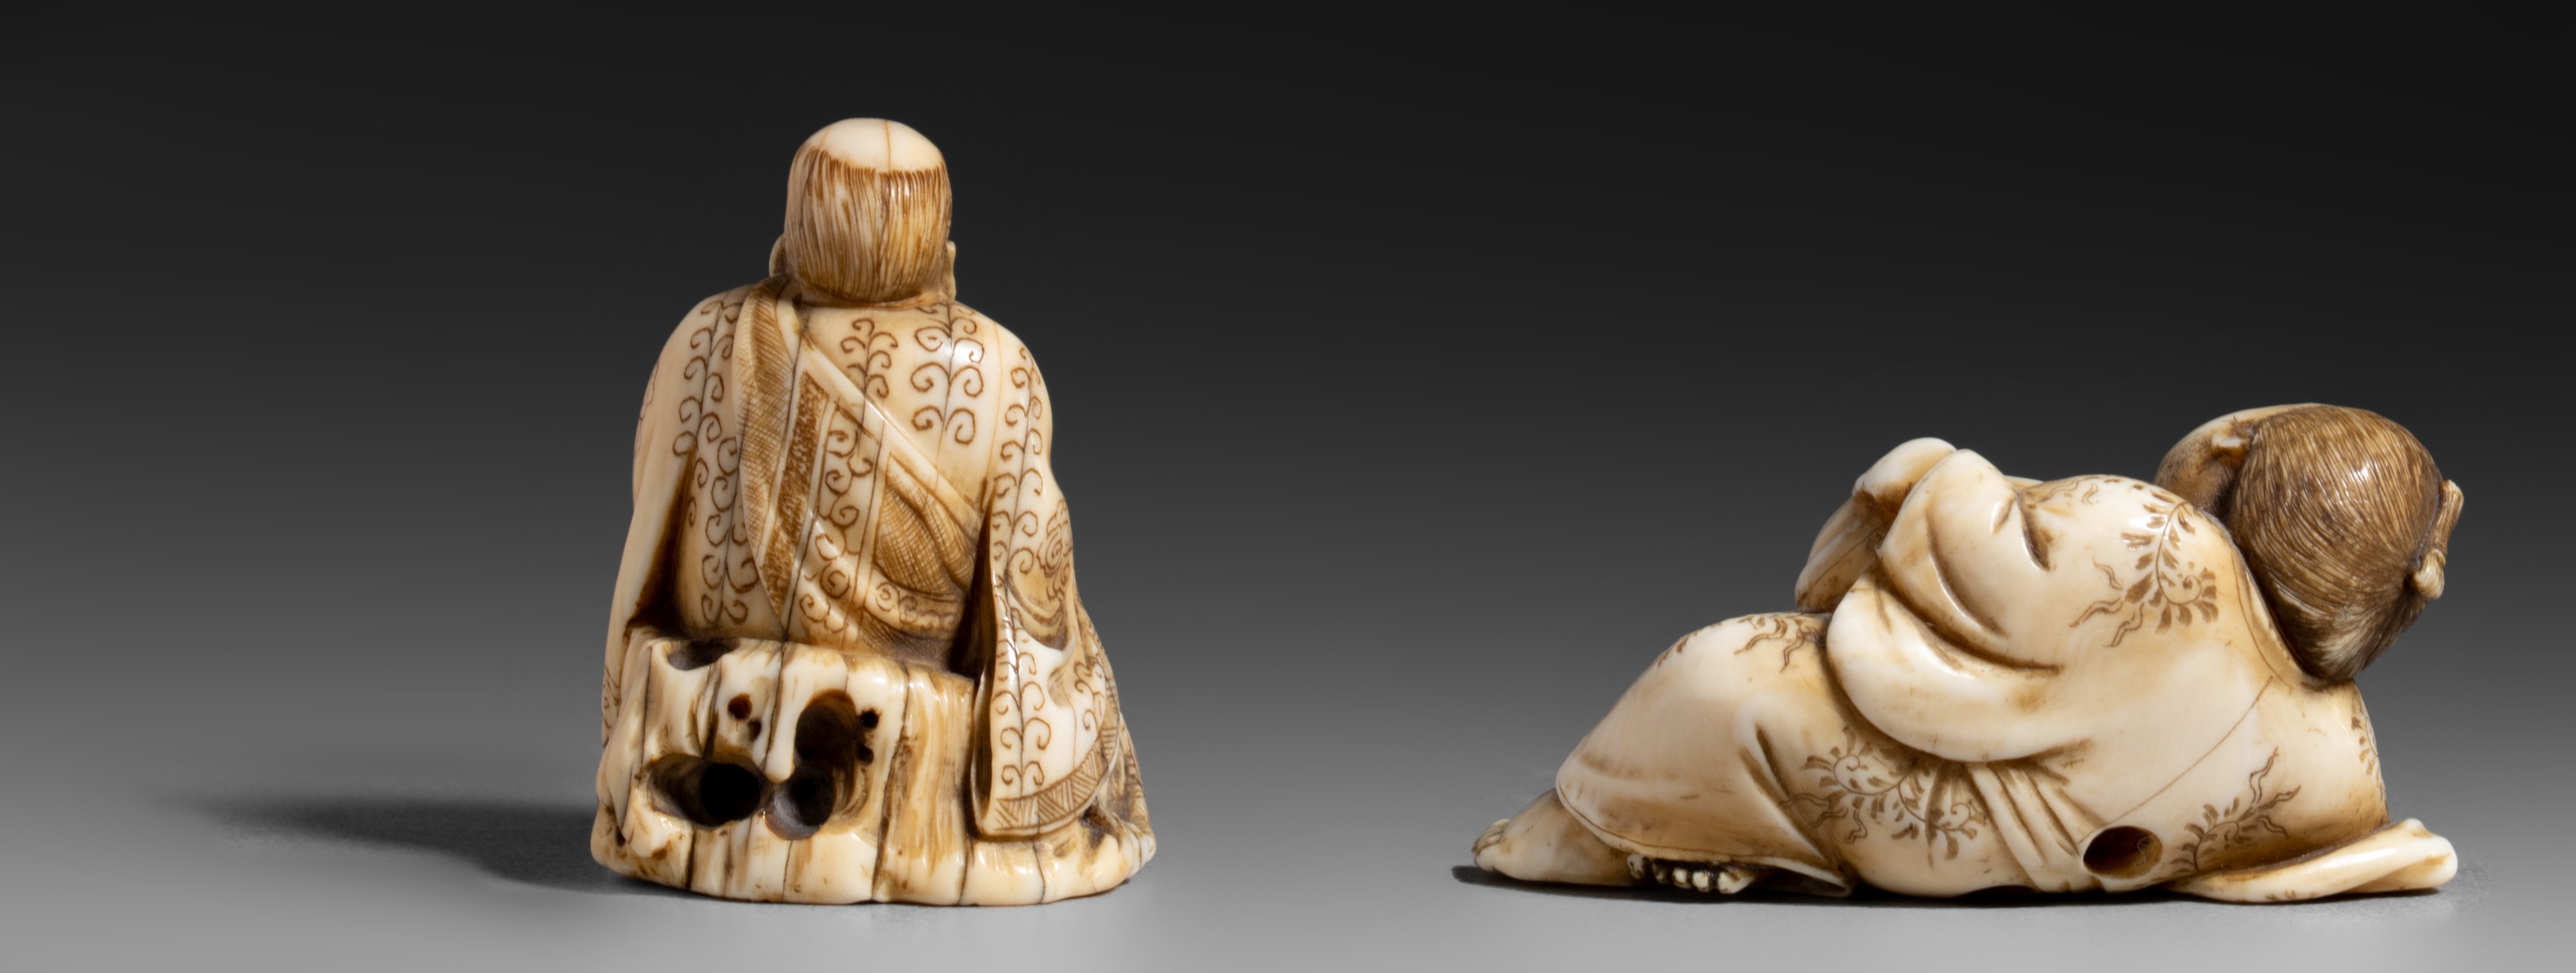 Two Japanese ivory netsuke, Meiji period, 22g - 24g (+) - Image 4 of 7